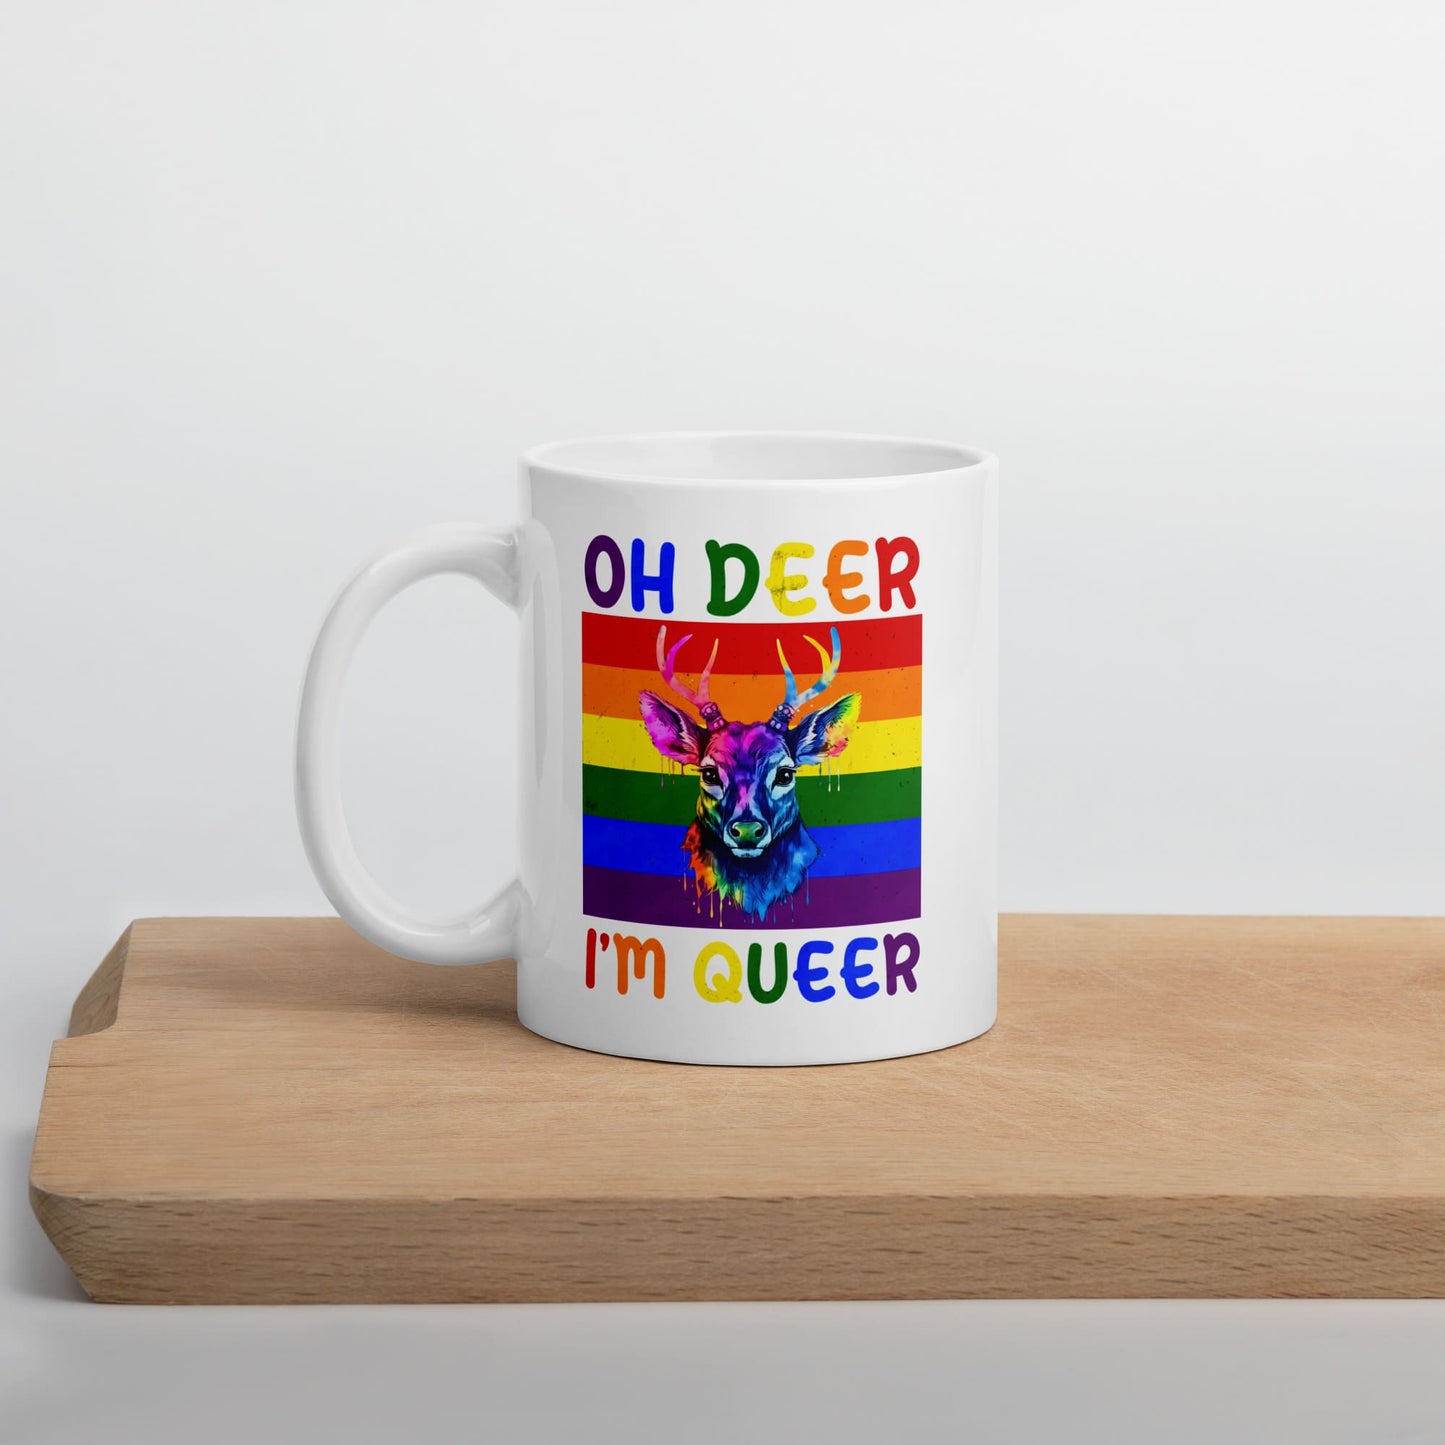 queer mug, funny rainbow deer coffee or tea cup on table